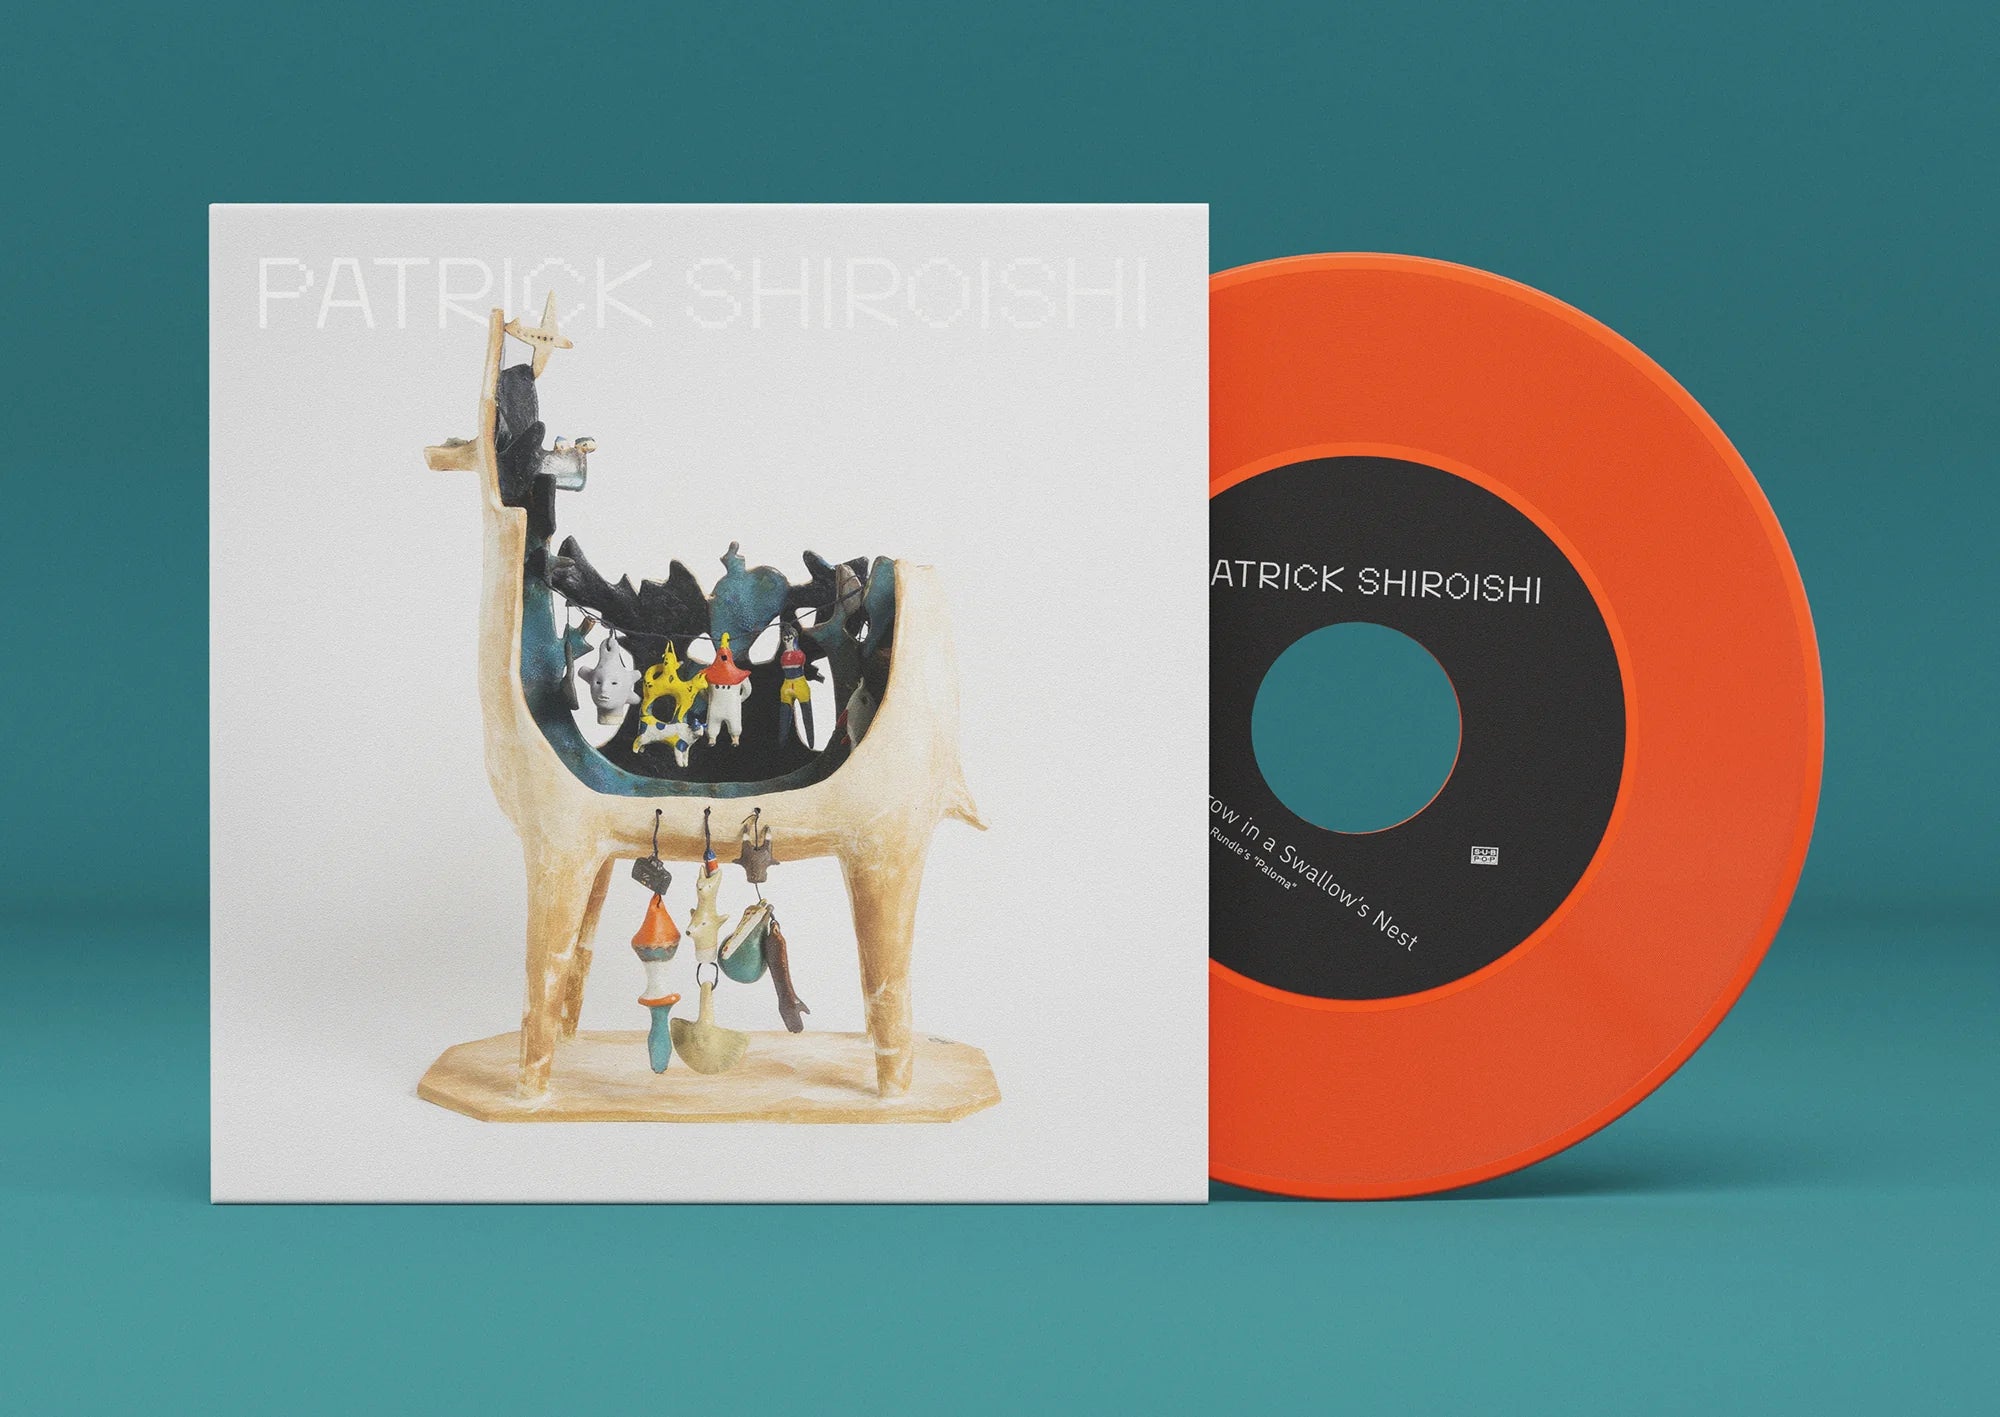 PATRICK SHIROISHI - A SPARROW IN A SWALLOW'S NEST Vinyl 7"